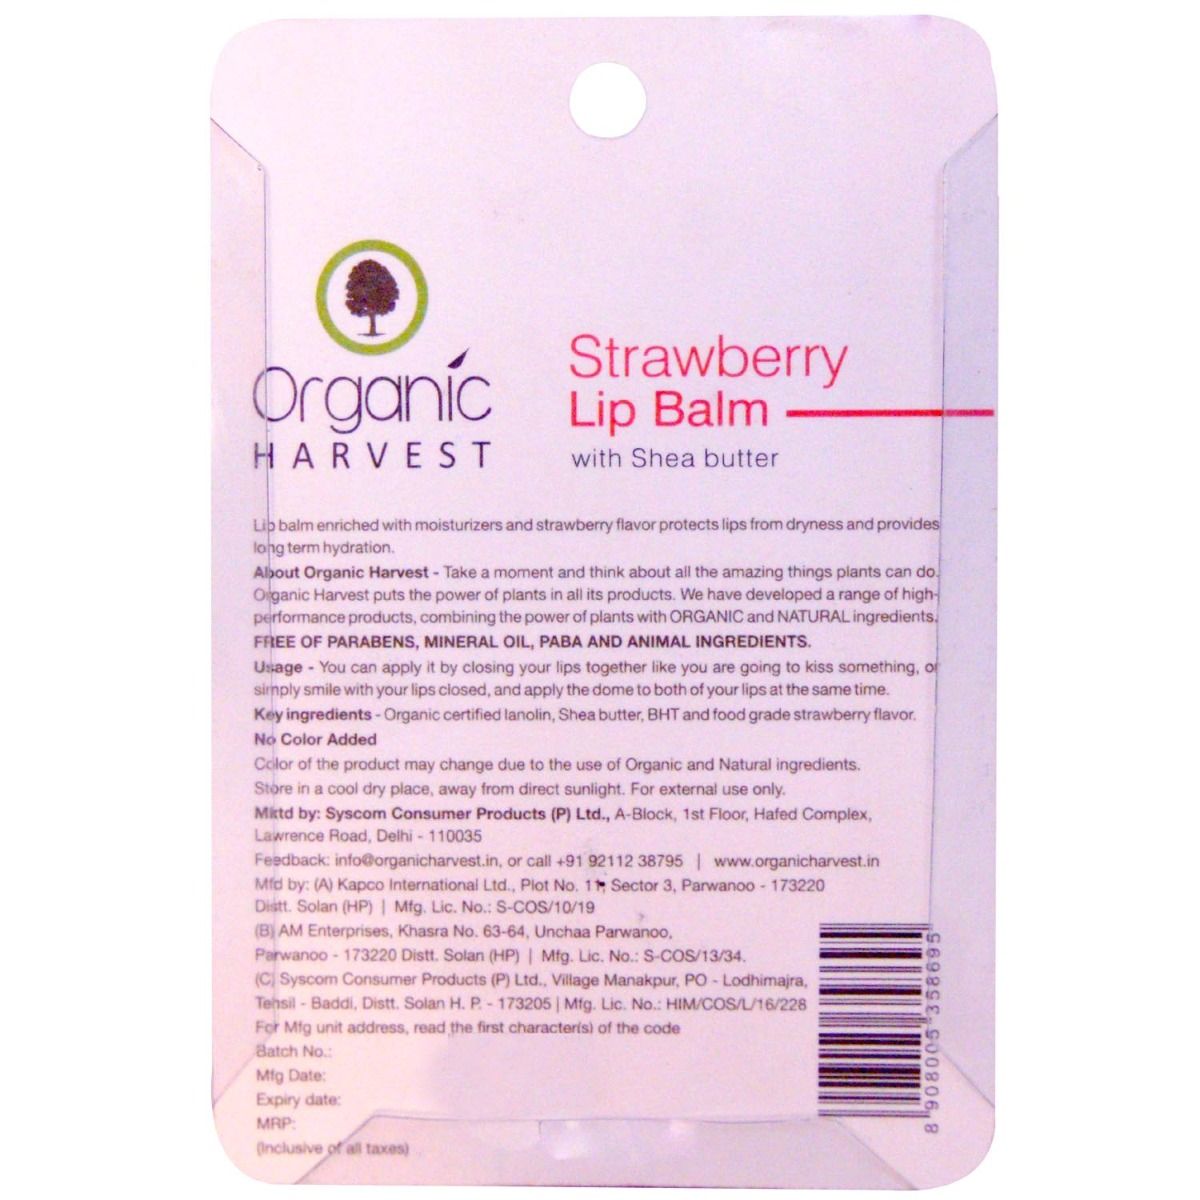 Organic Harvest Strawberry Lip Balm, 10 gm, Pack of 1 